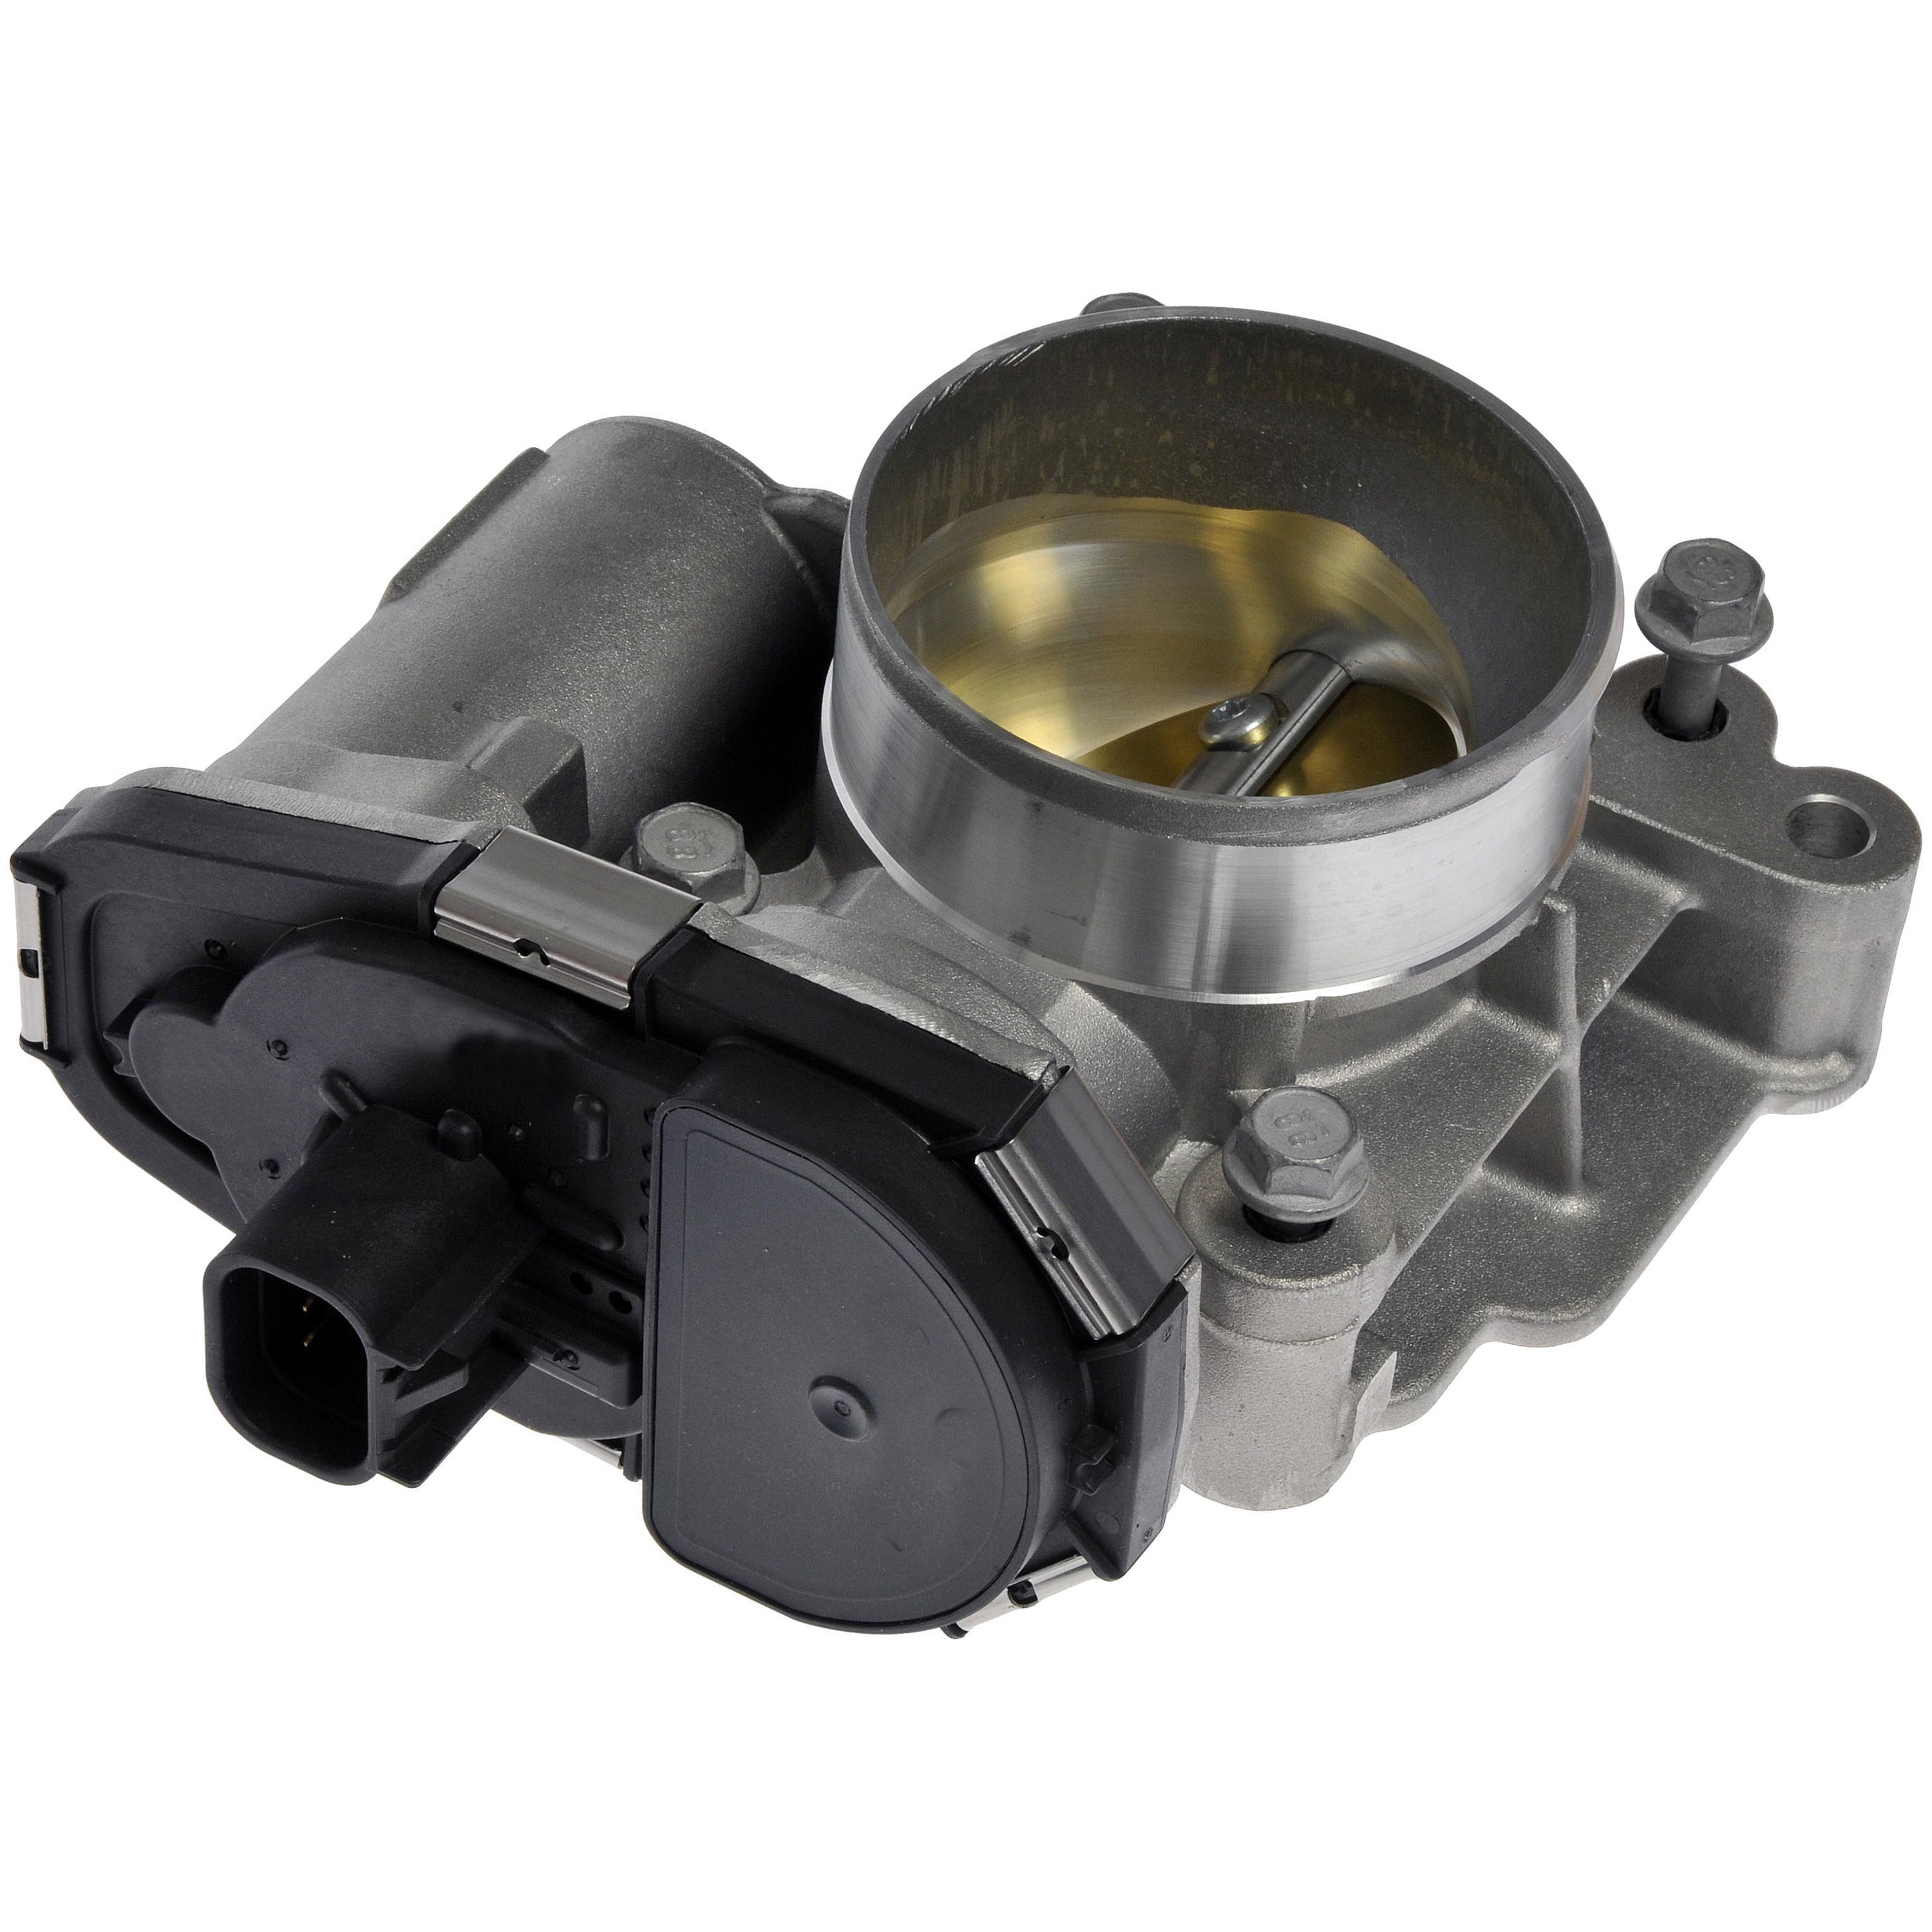 Dorman 977-021 Fuel Injection Throttle Body for Select Chevrolet/Pontiac/Saturn Models 